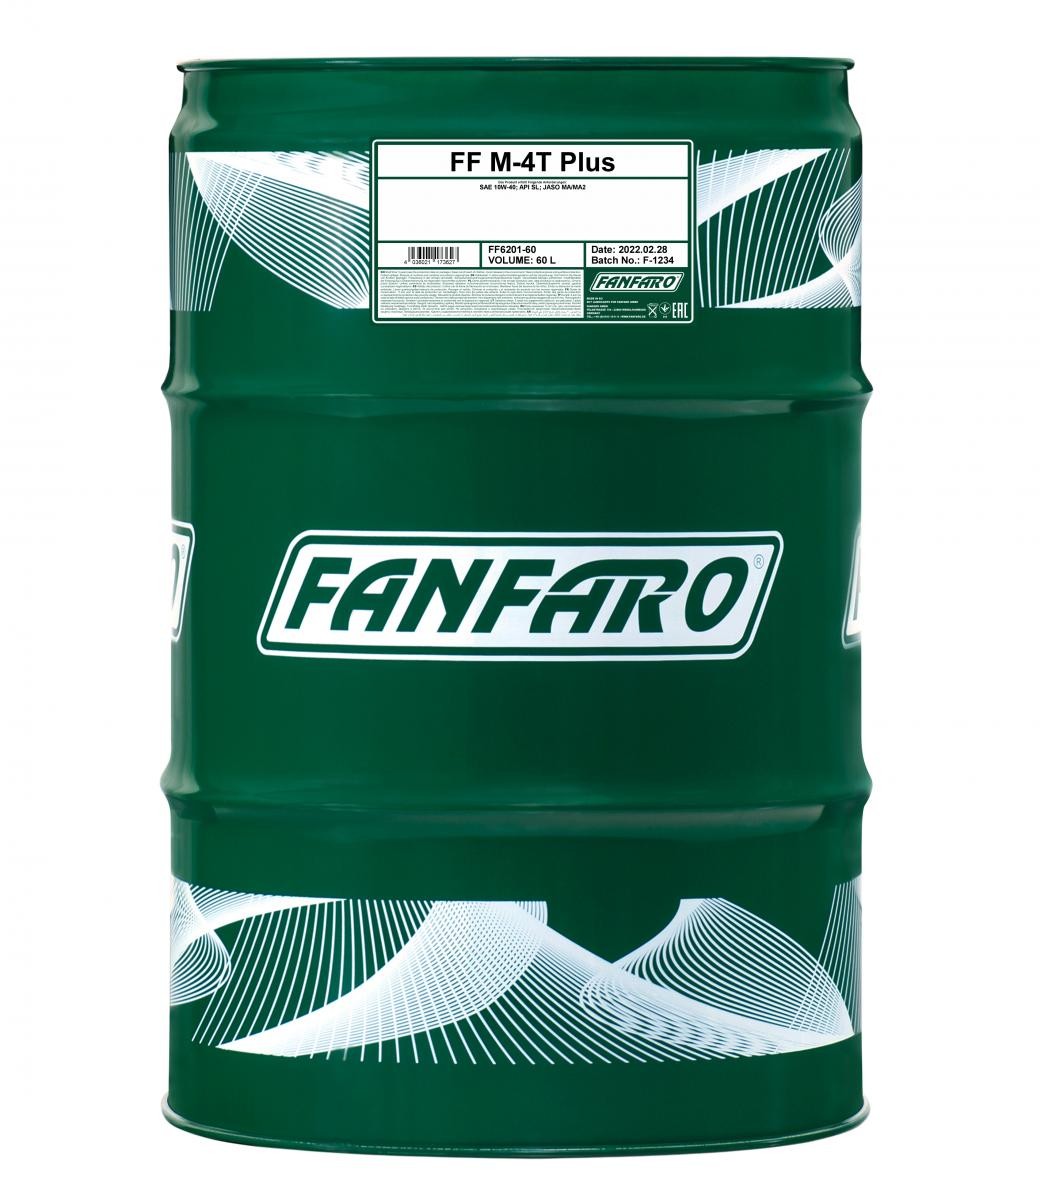 Motorrad FANFARO M-4T+ 10W-40, 60l, Teilsynthetiköl Motoröl FF6201-60 günstig kaufen